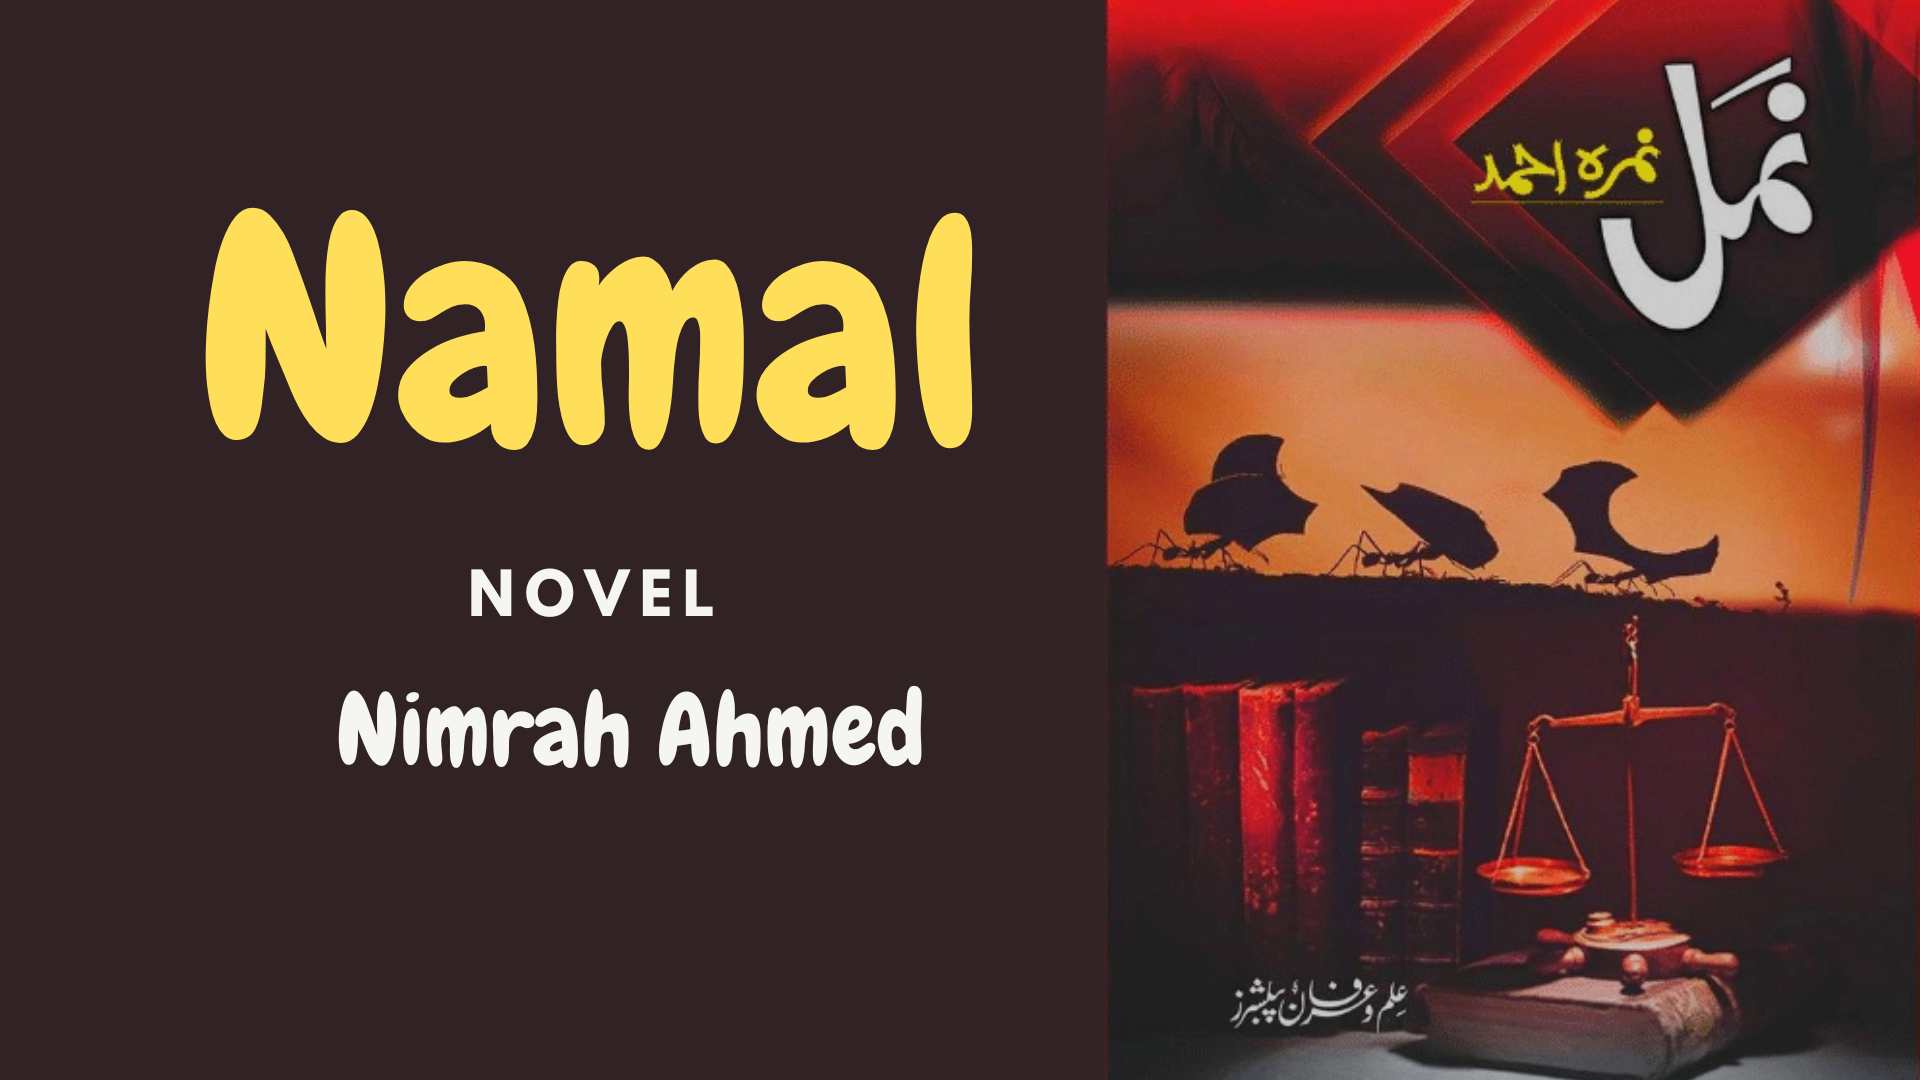 Namal novel book cover